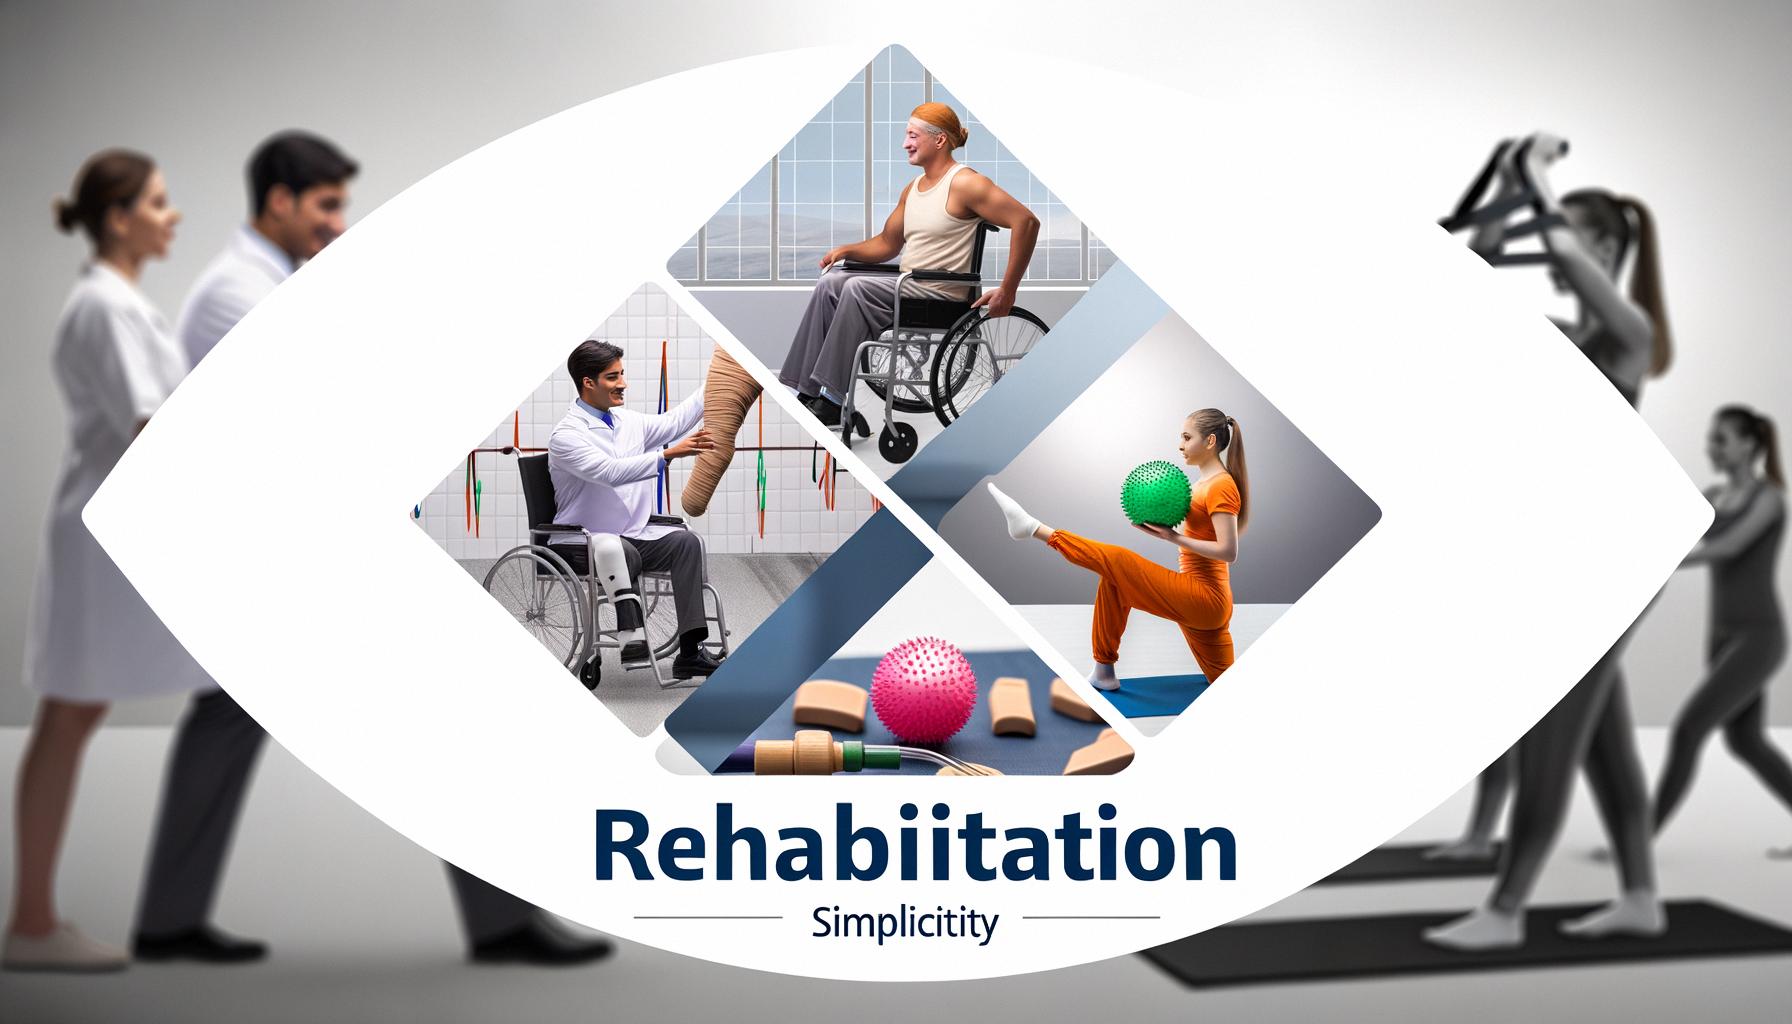 Rehabilitation critically mitigates risks, improves functionality across diverse conditions Balanced News